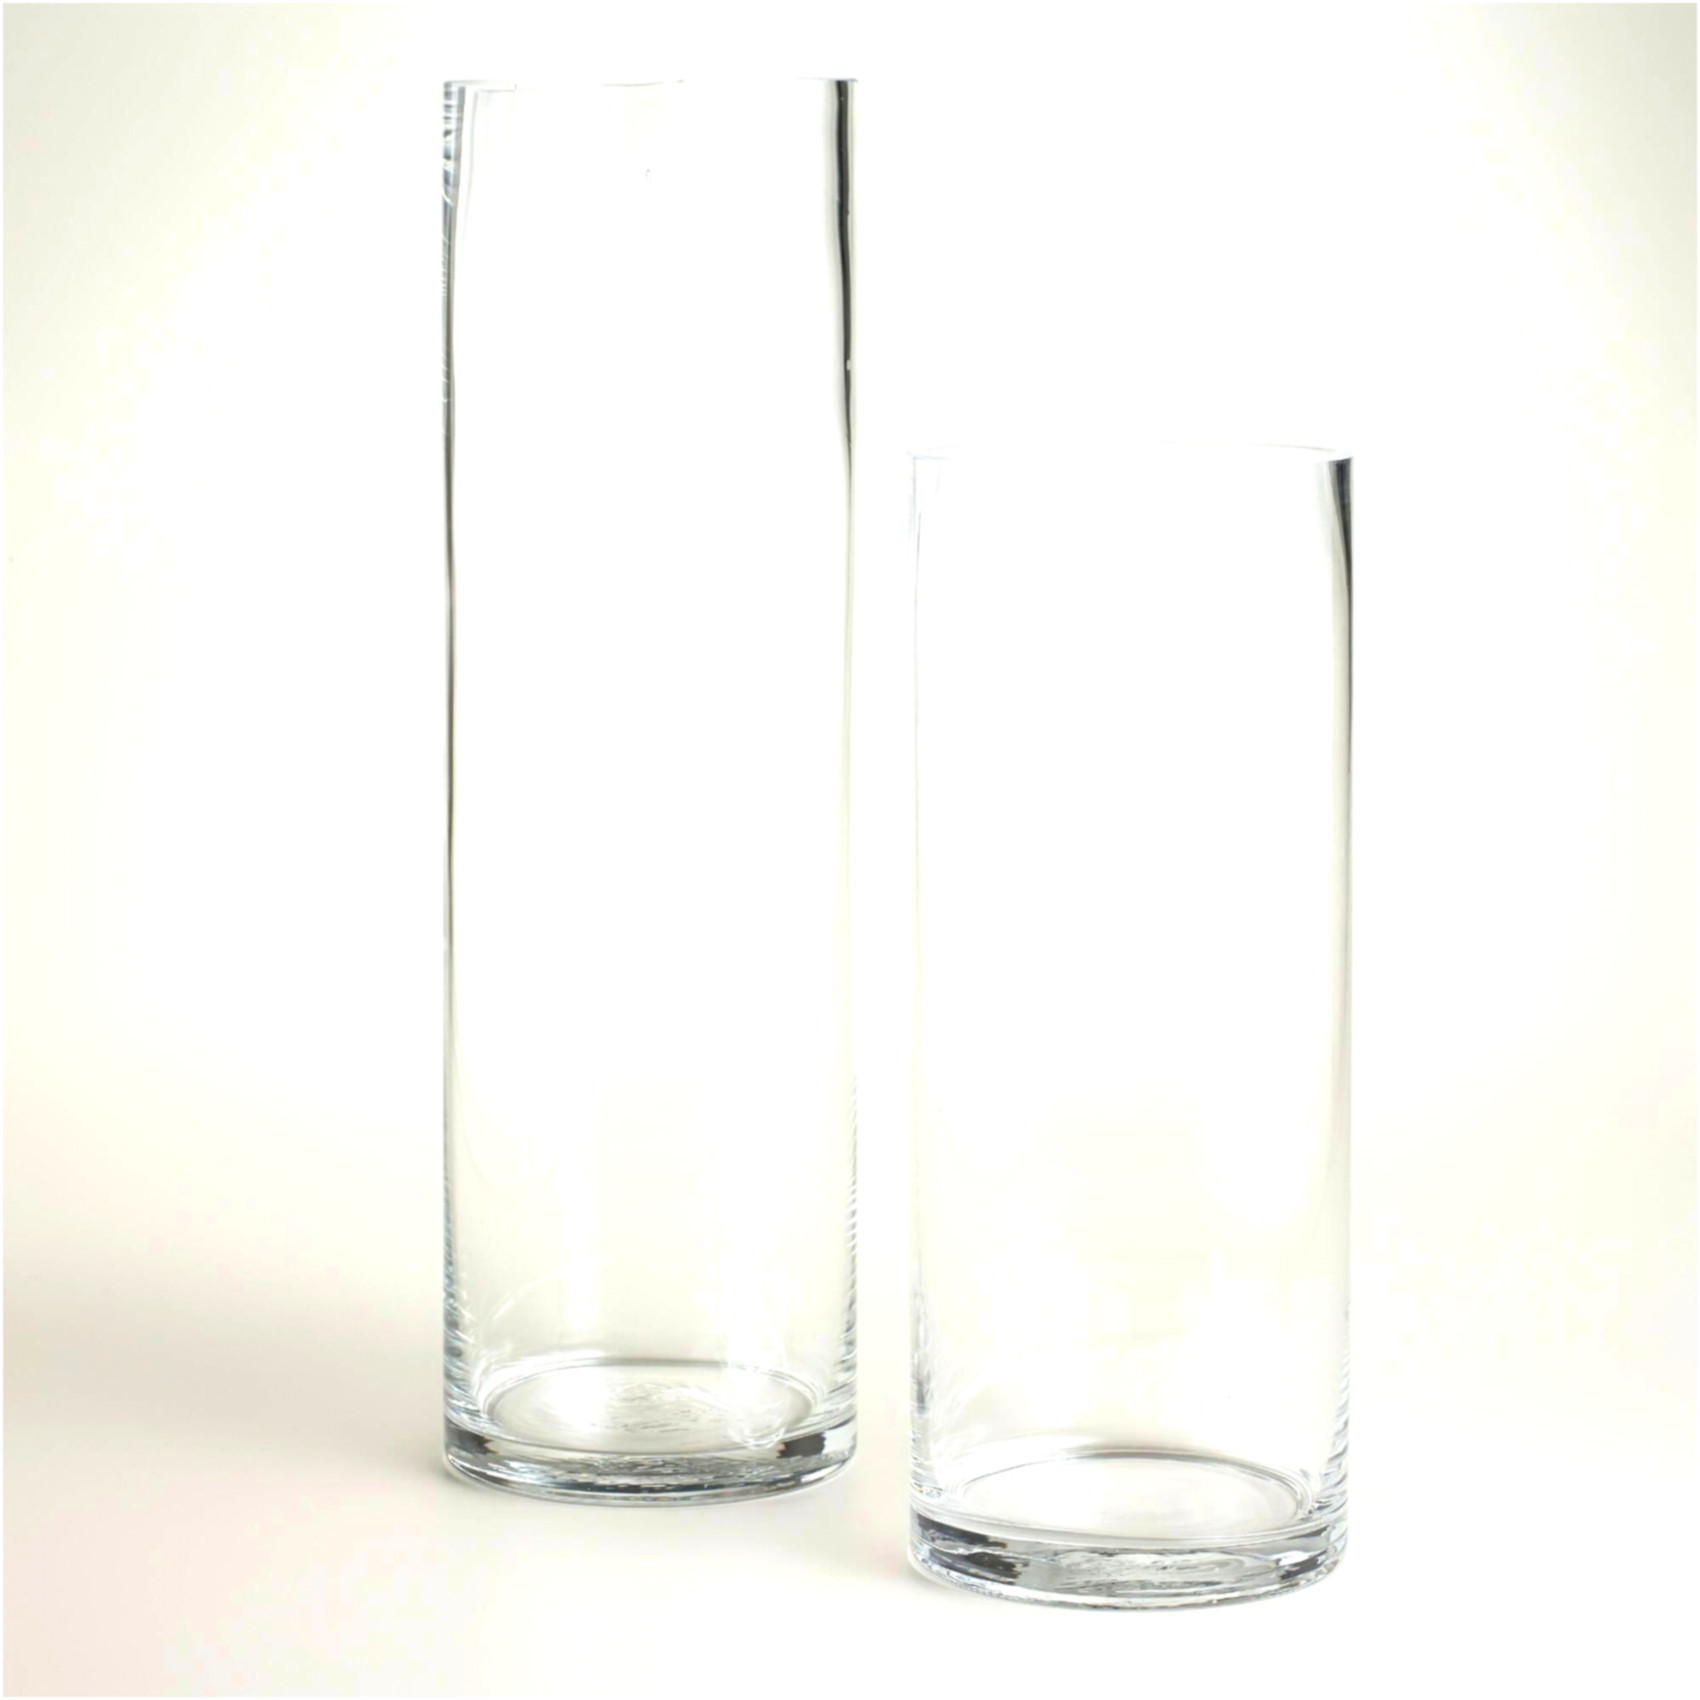 cheap glass vases bulk wholesale uk of why you should not go to glass vases wholesale glass vases in crystal glass vases wholesale inspirational 30 elegant vases with